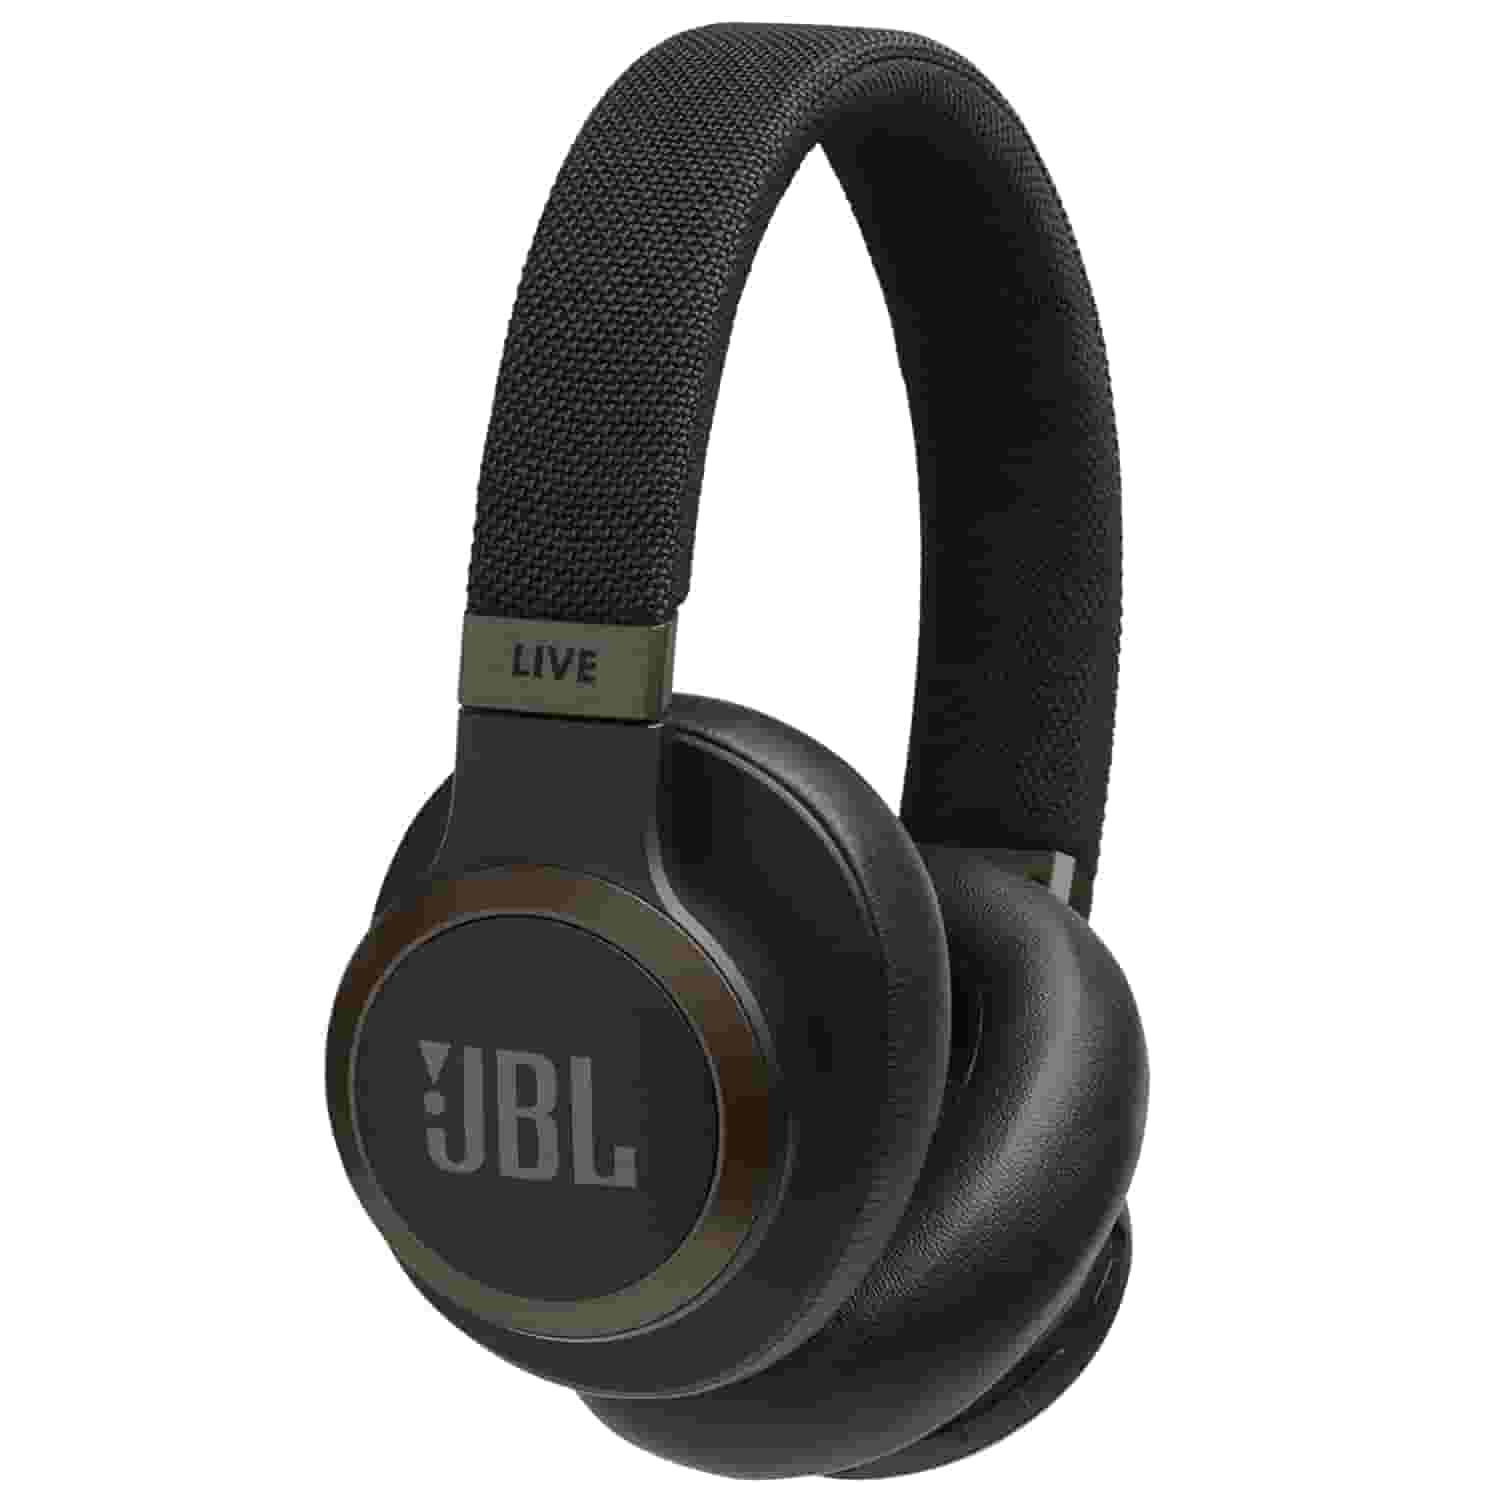 4. JBL Live 650BTNC